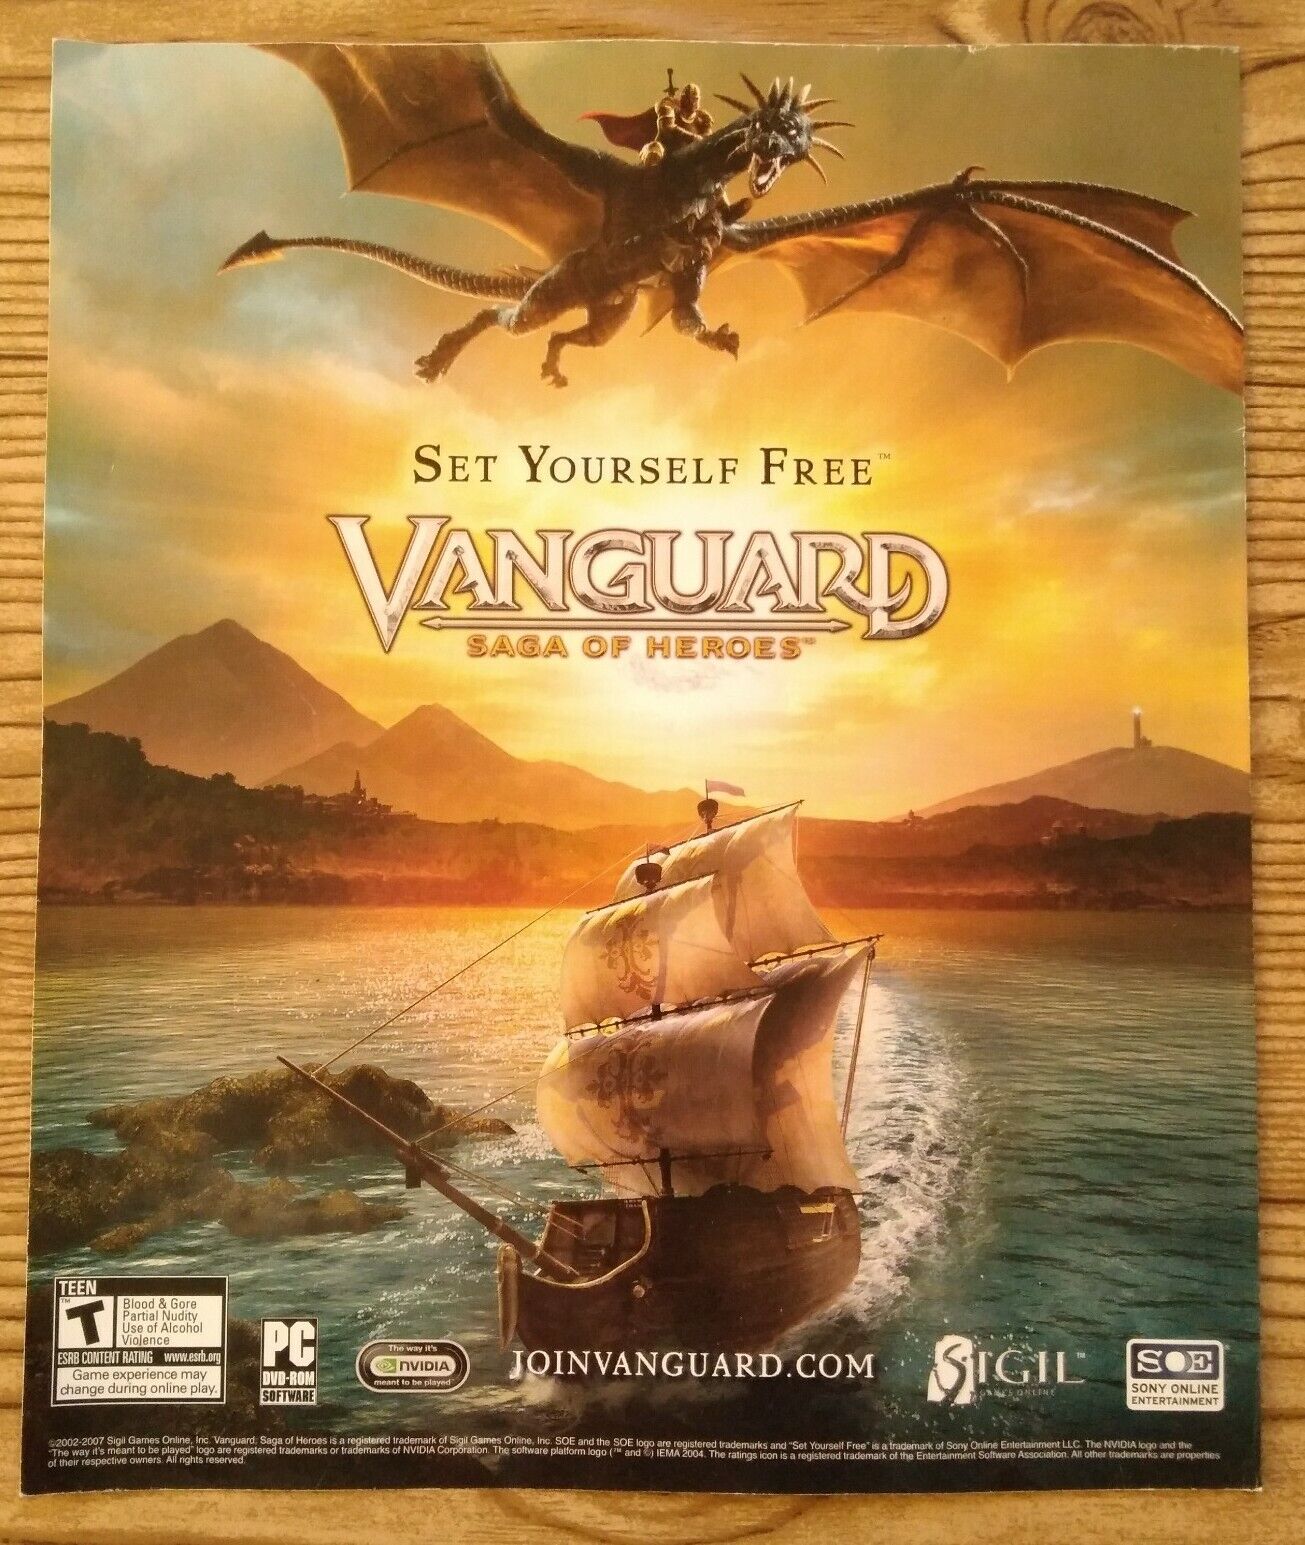 Vanguard: Saga of Heroes PC 2007 Print Ad/Poster Official Big Box MMO Promo Art